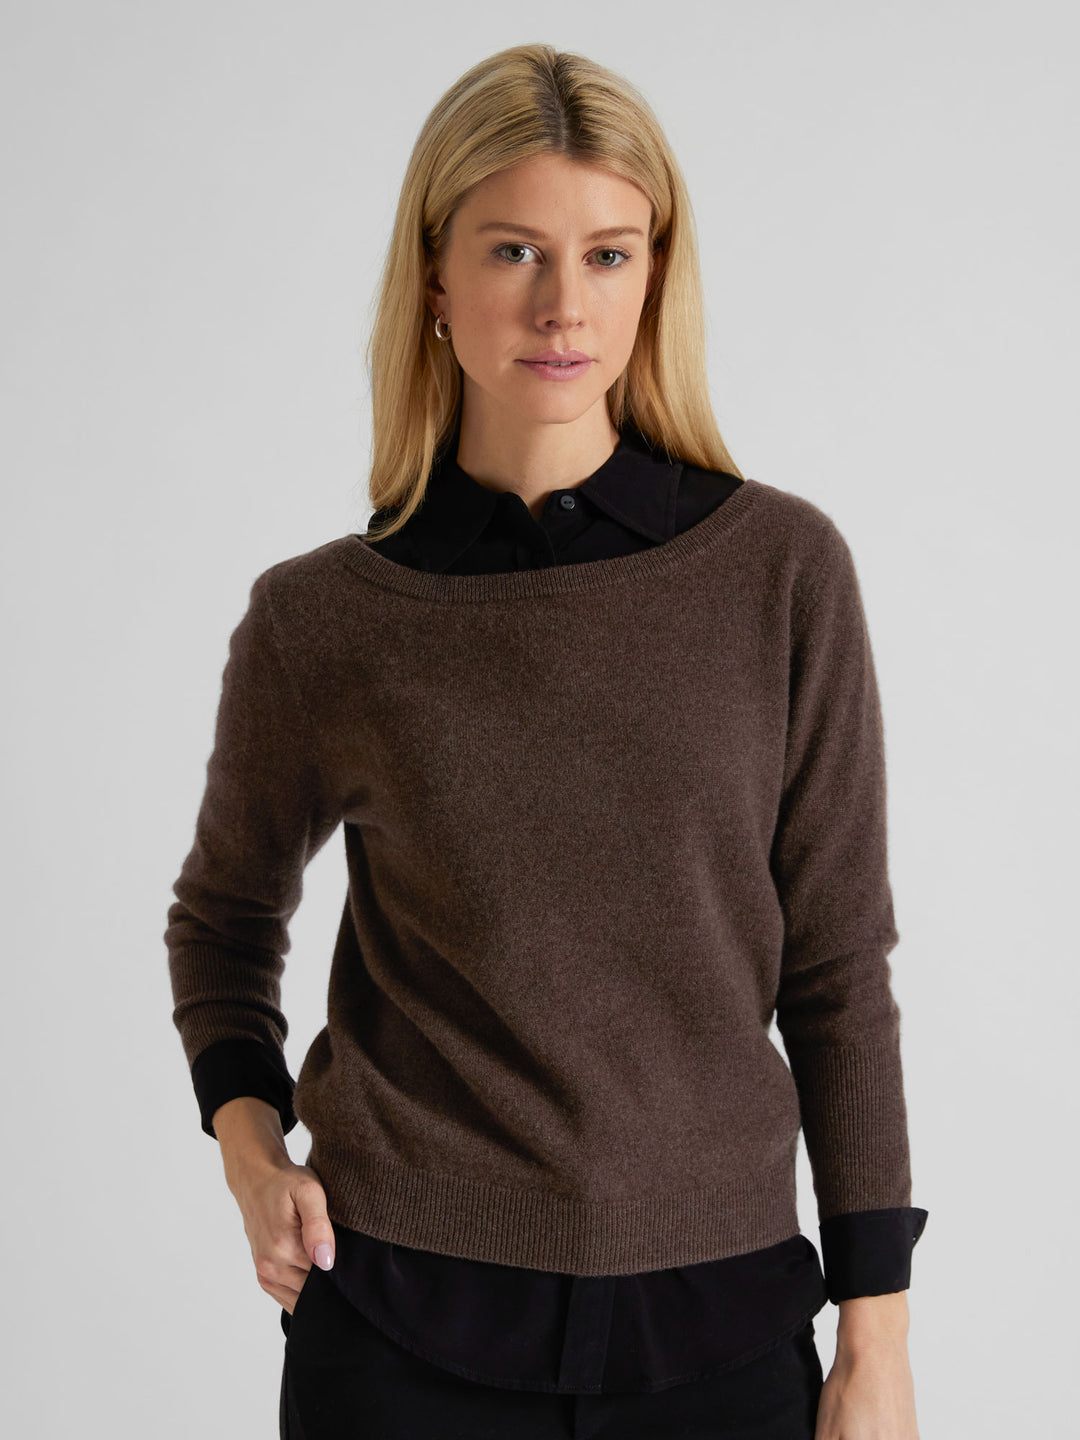 Cashmere sweater "Asta" in 100% pure cashmere. Scandinavian design by Kashmina. Color: Dark Brown.